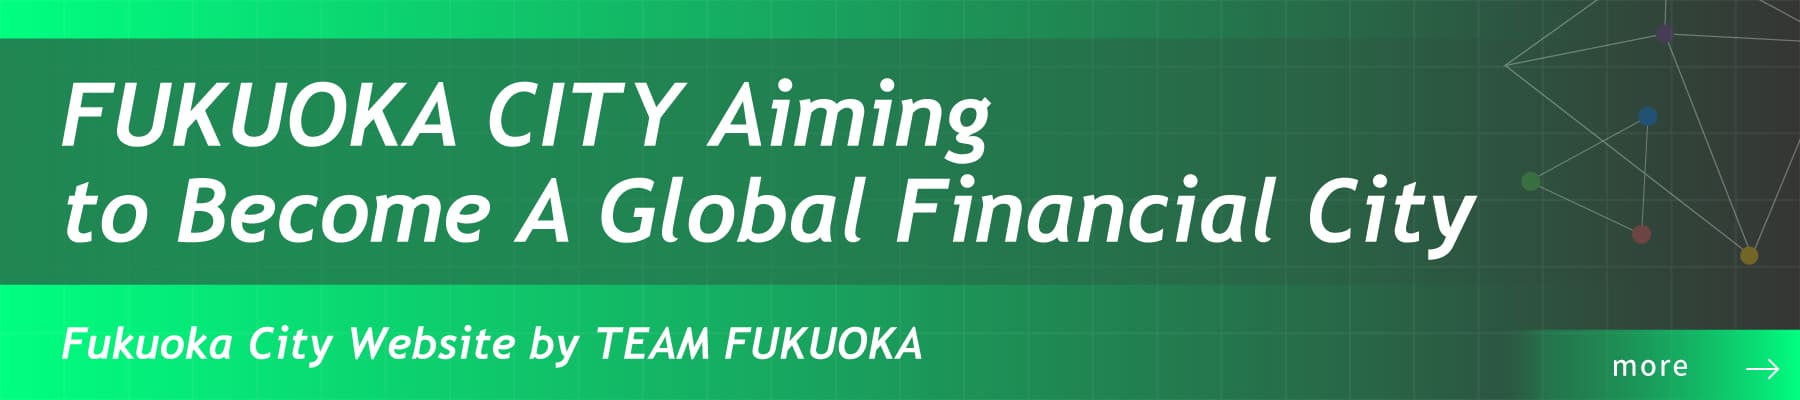 FUKUOKA CITY Aiming to Become A Global Financial City